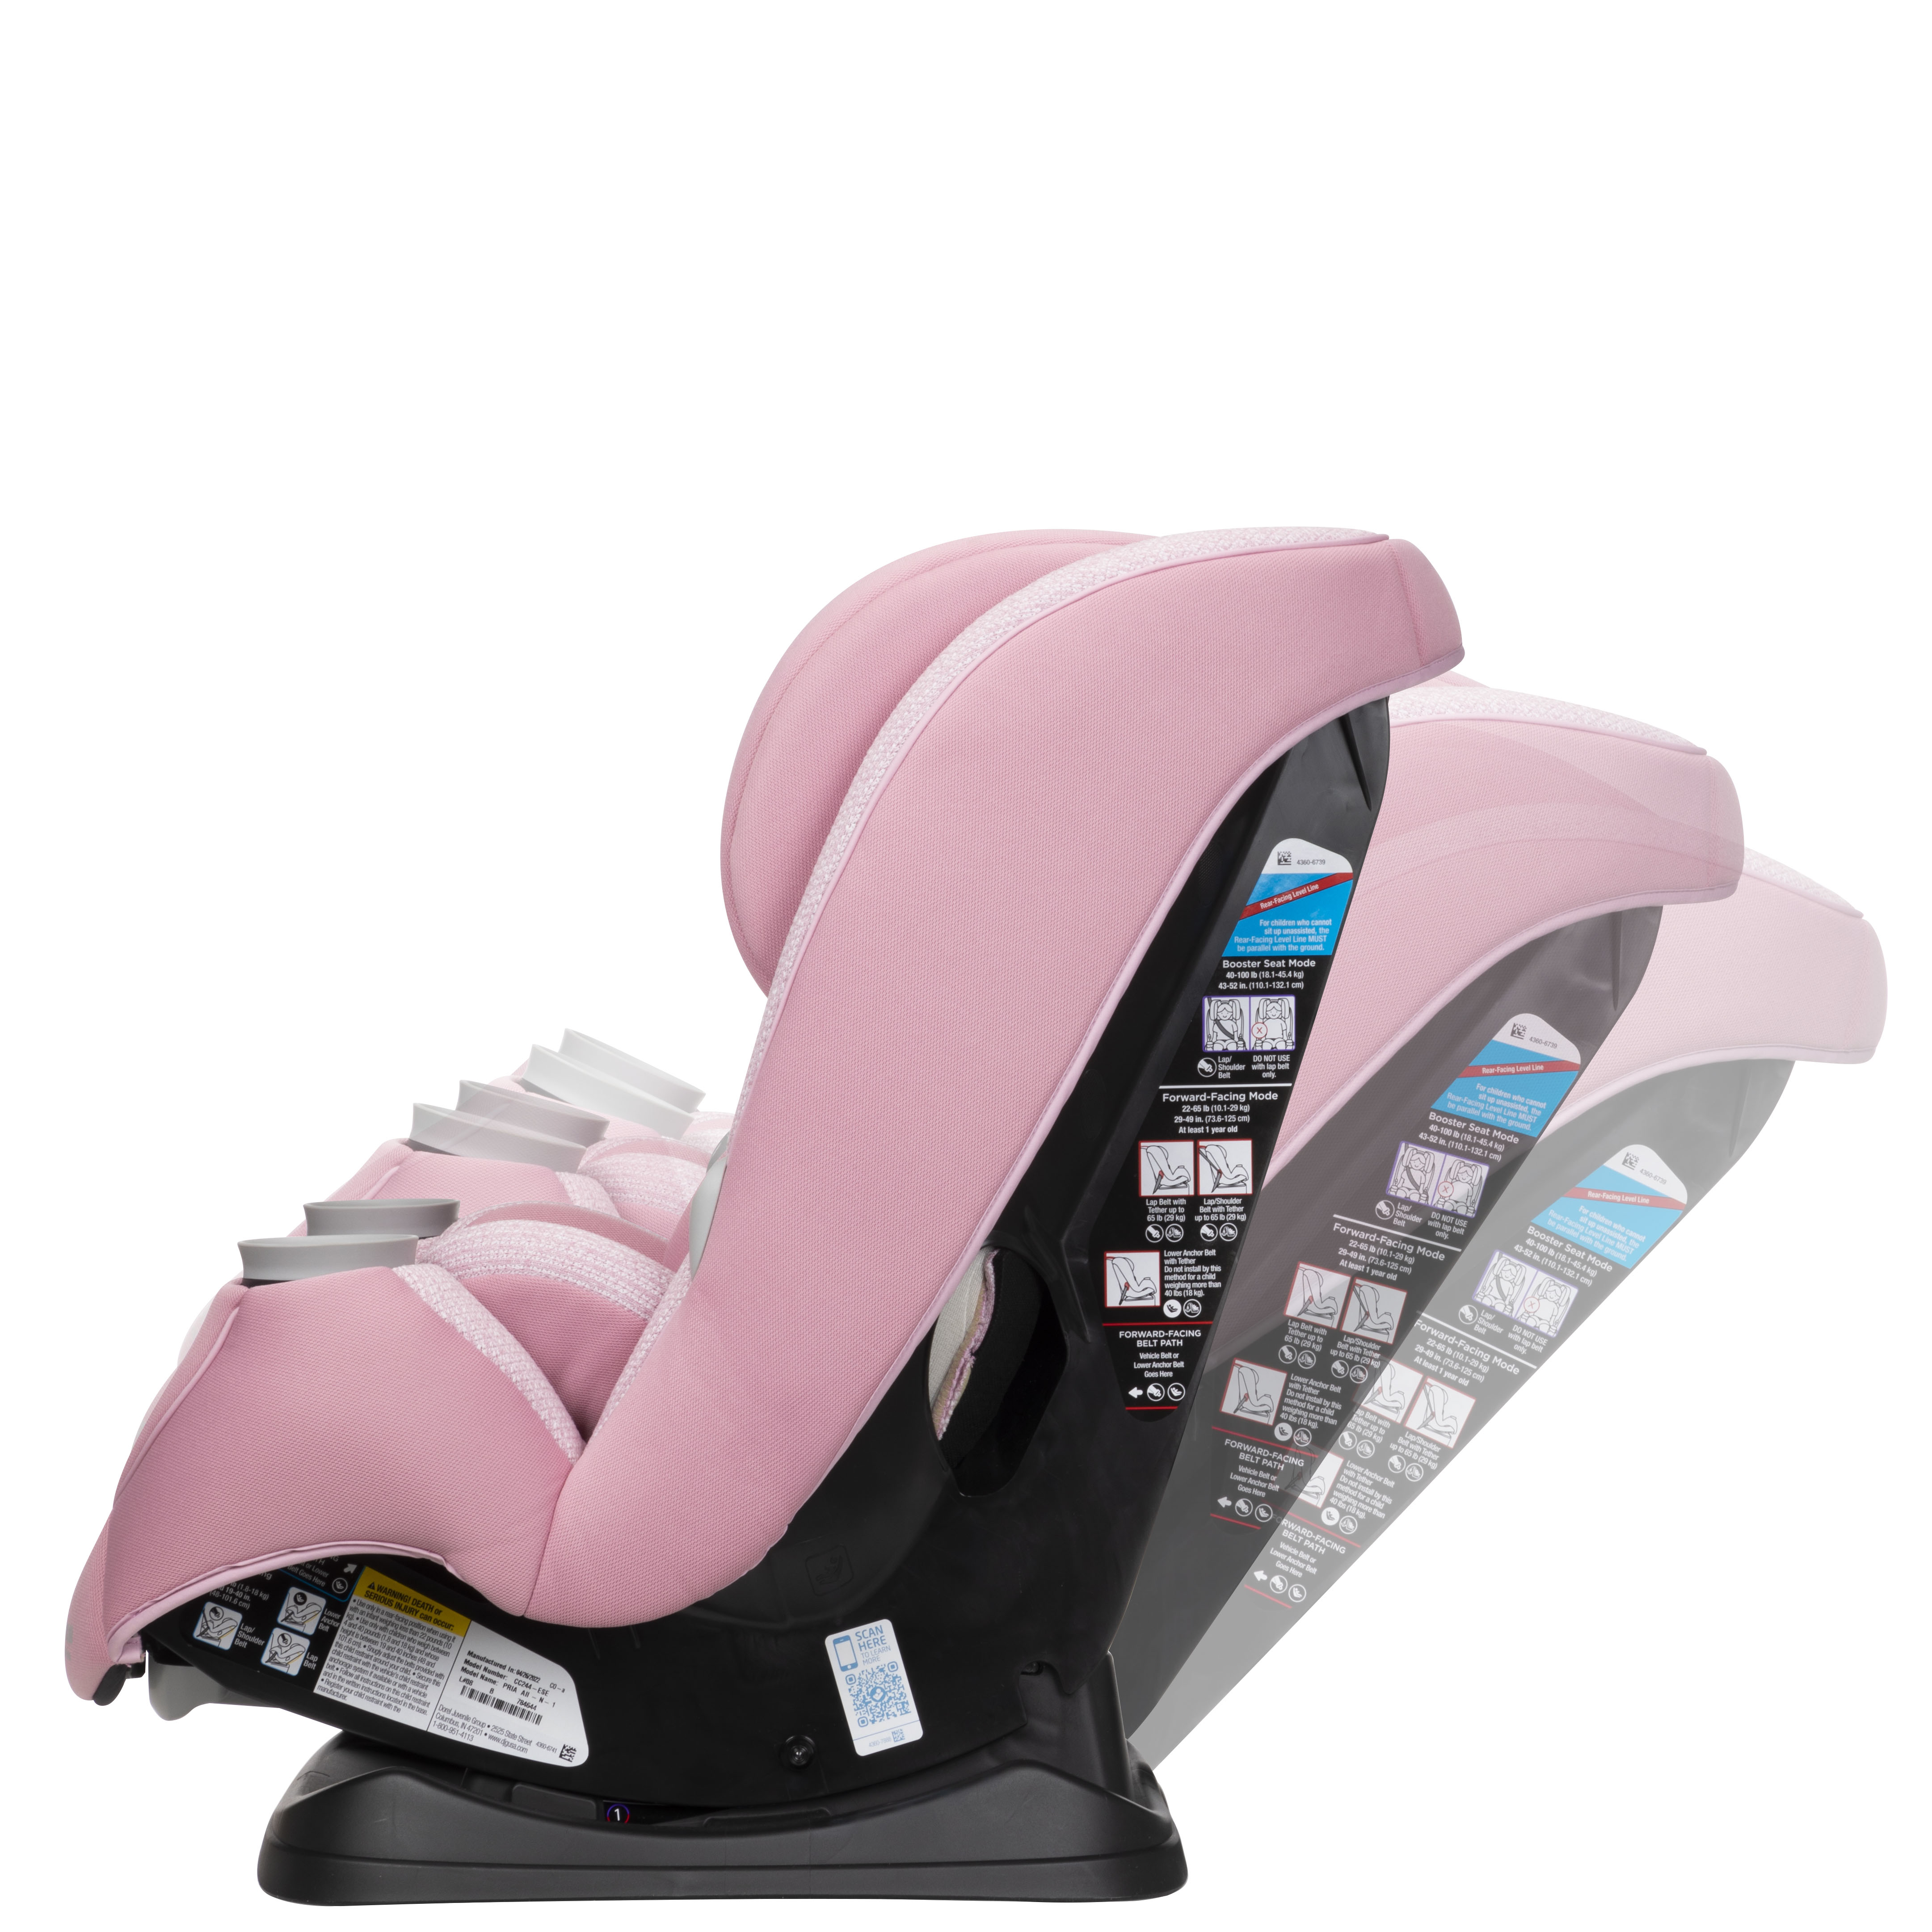 Maxi-Cosi Pria All-in-One Convertible Car Seat, Rose Pink Sweater – PureCosi, - image 4 of 6